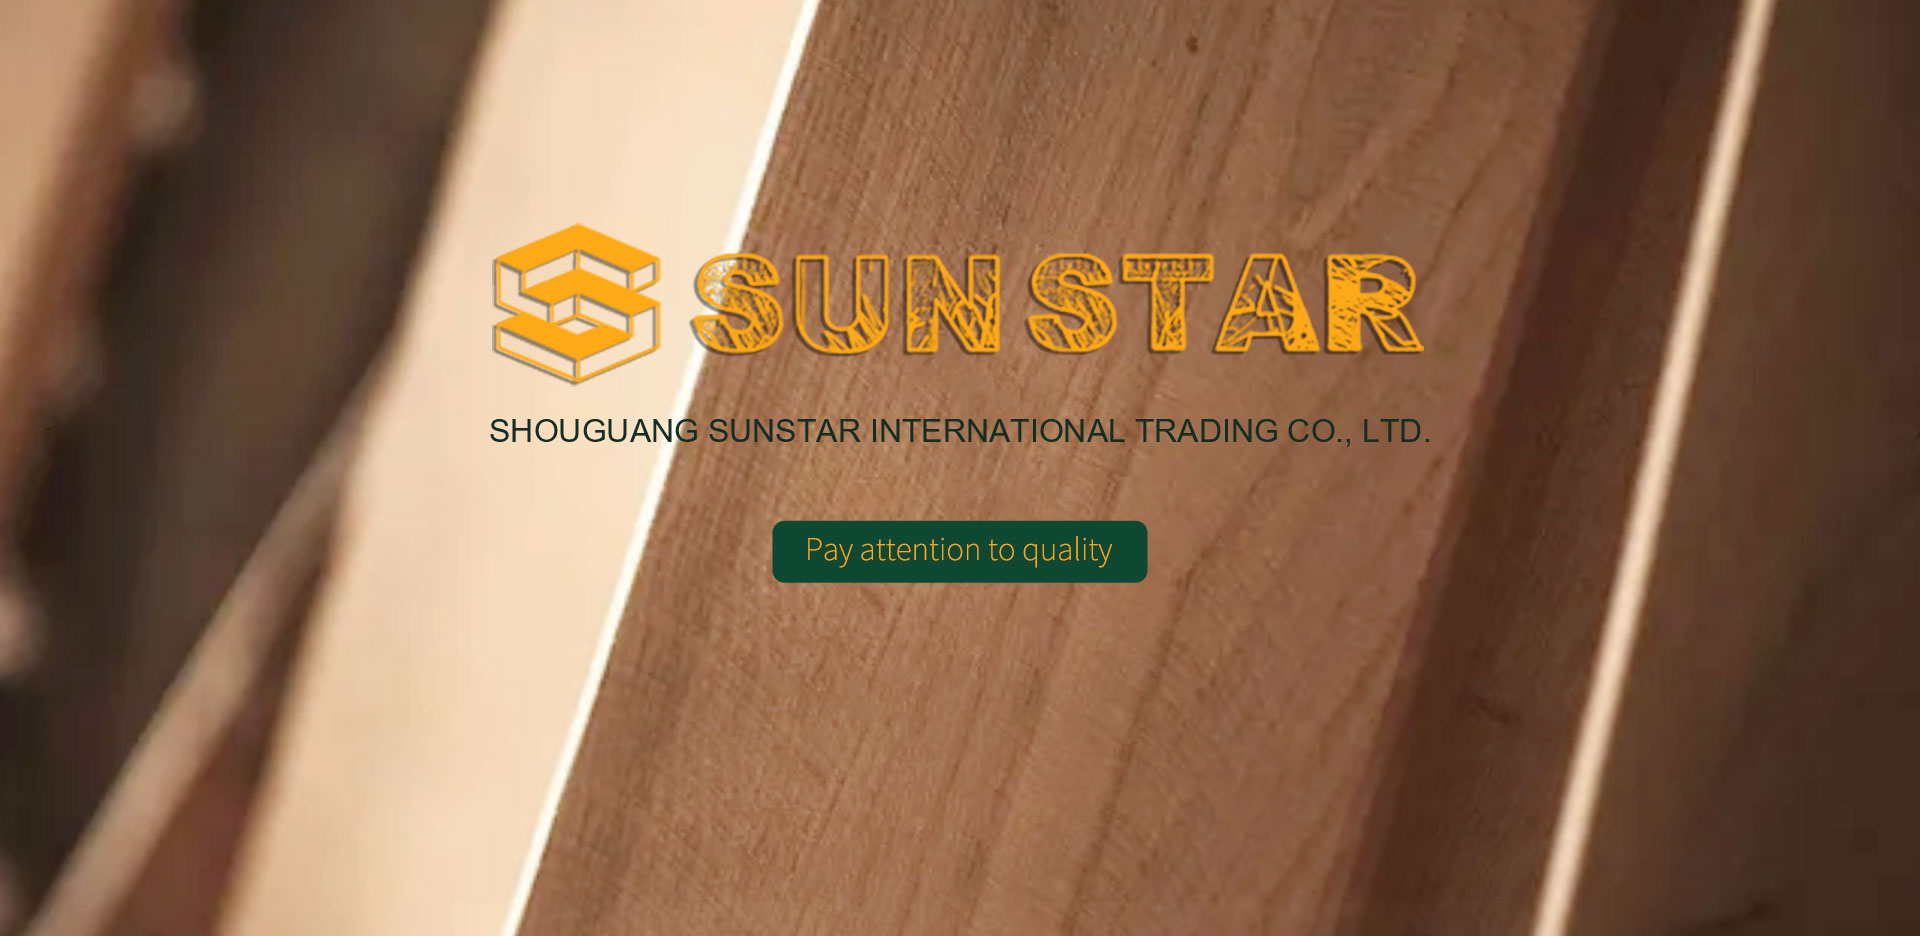 Shouguang Suntar International Trading Co., Ltd.